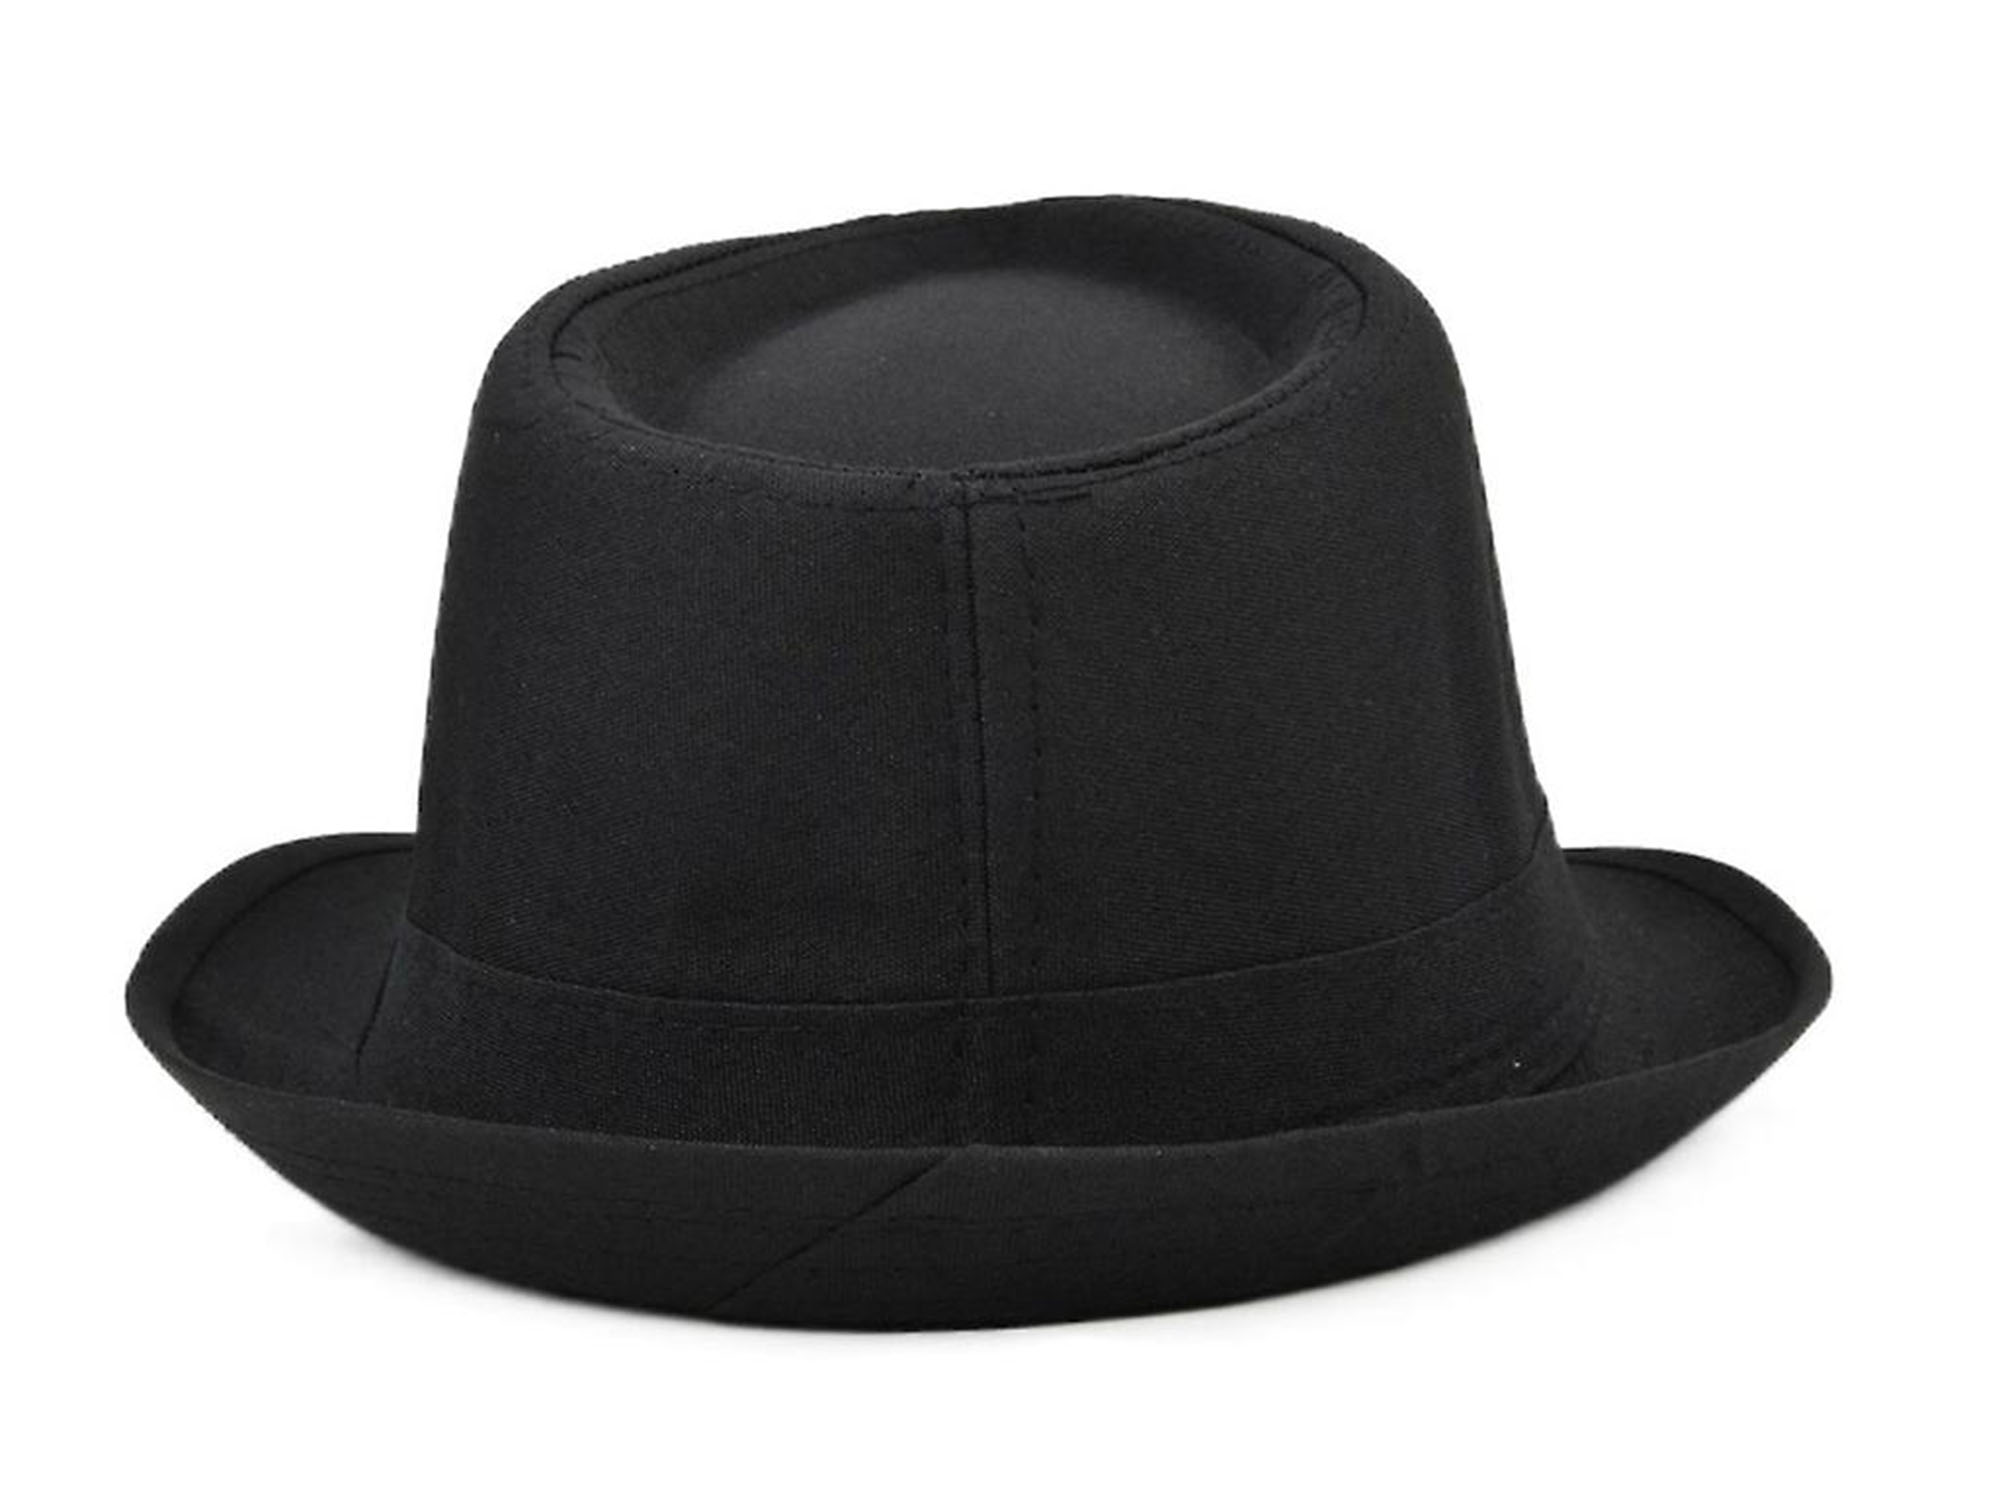 Çocuk Boy Siyah Kumaş Fötr Şapka Gösteri Şapkası Michael Jackson Şapkası 54 No (CLZ)